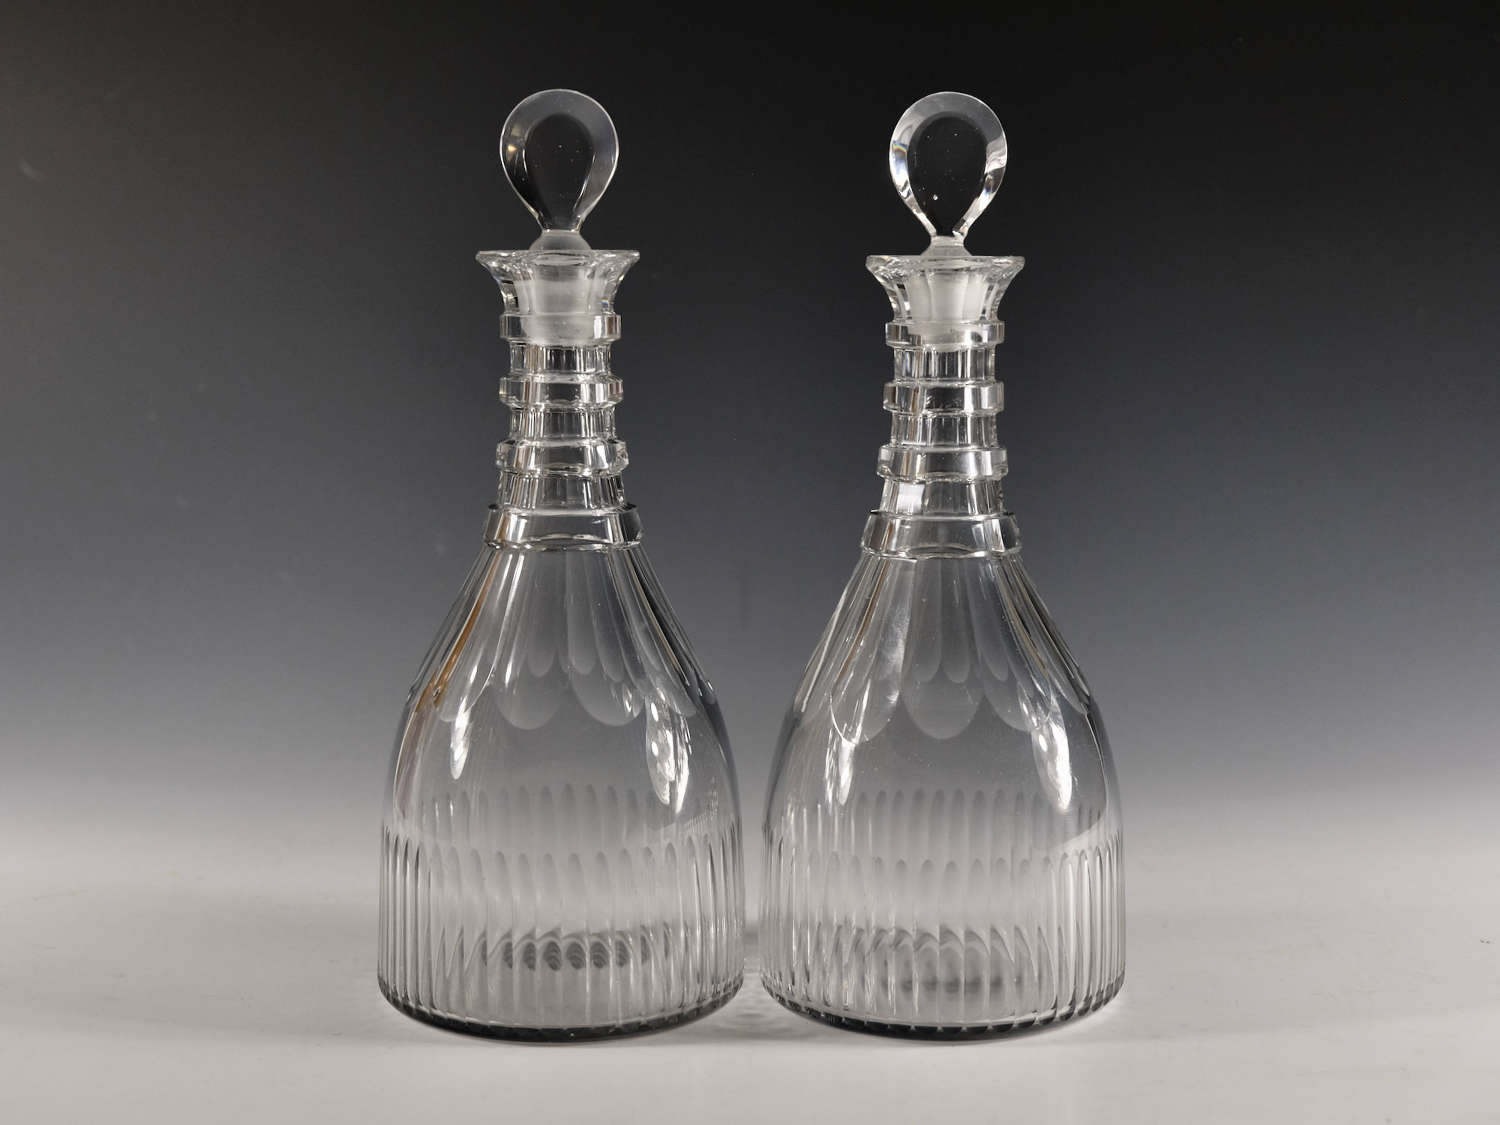 Antique glass pair of decanter English c1810